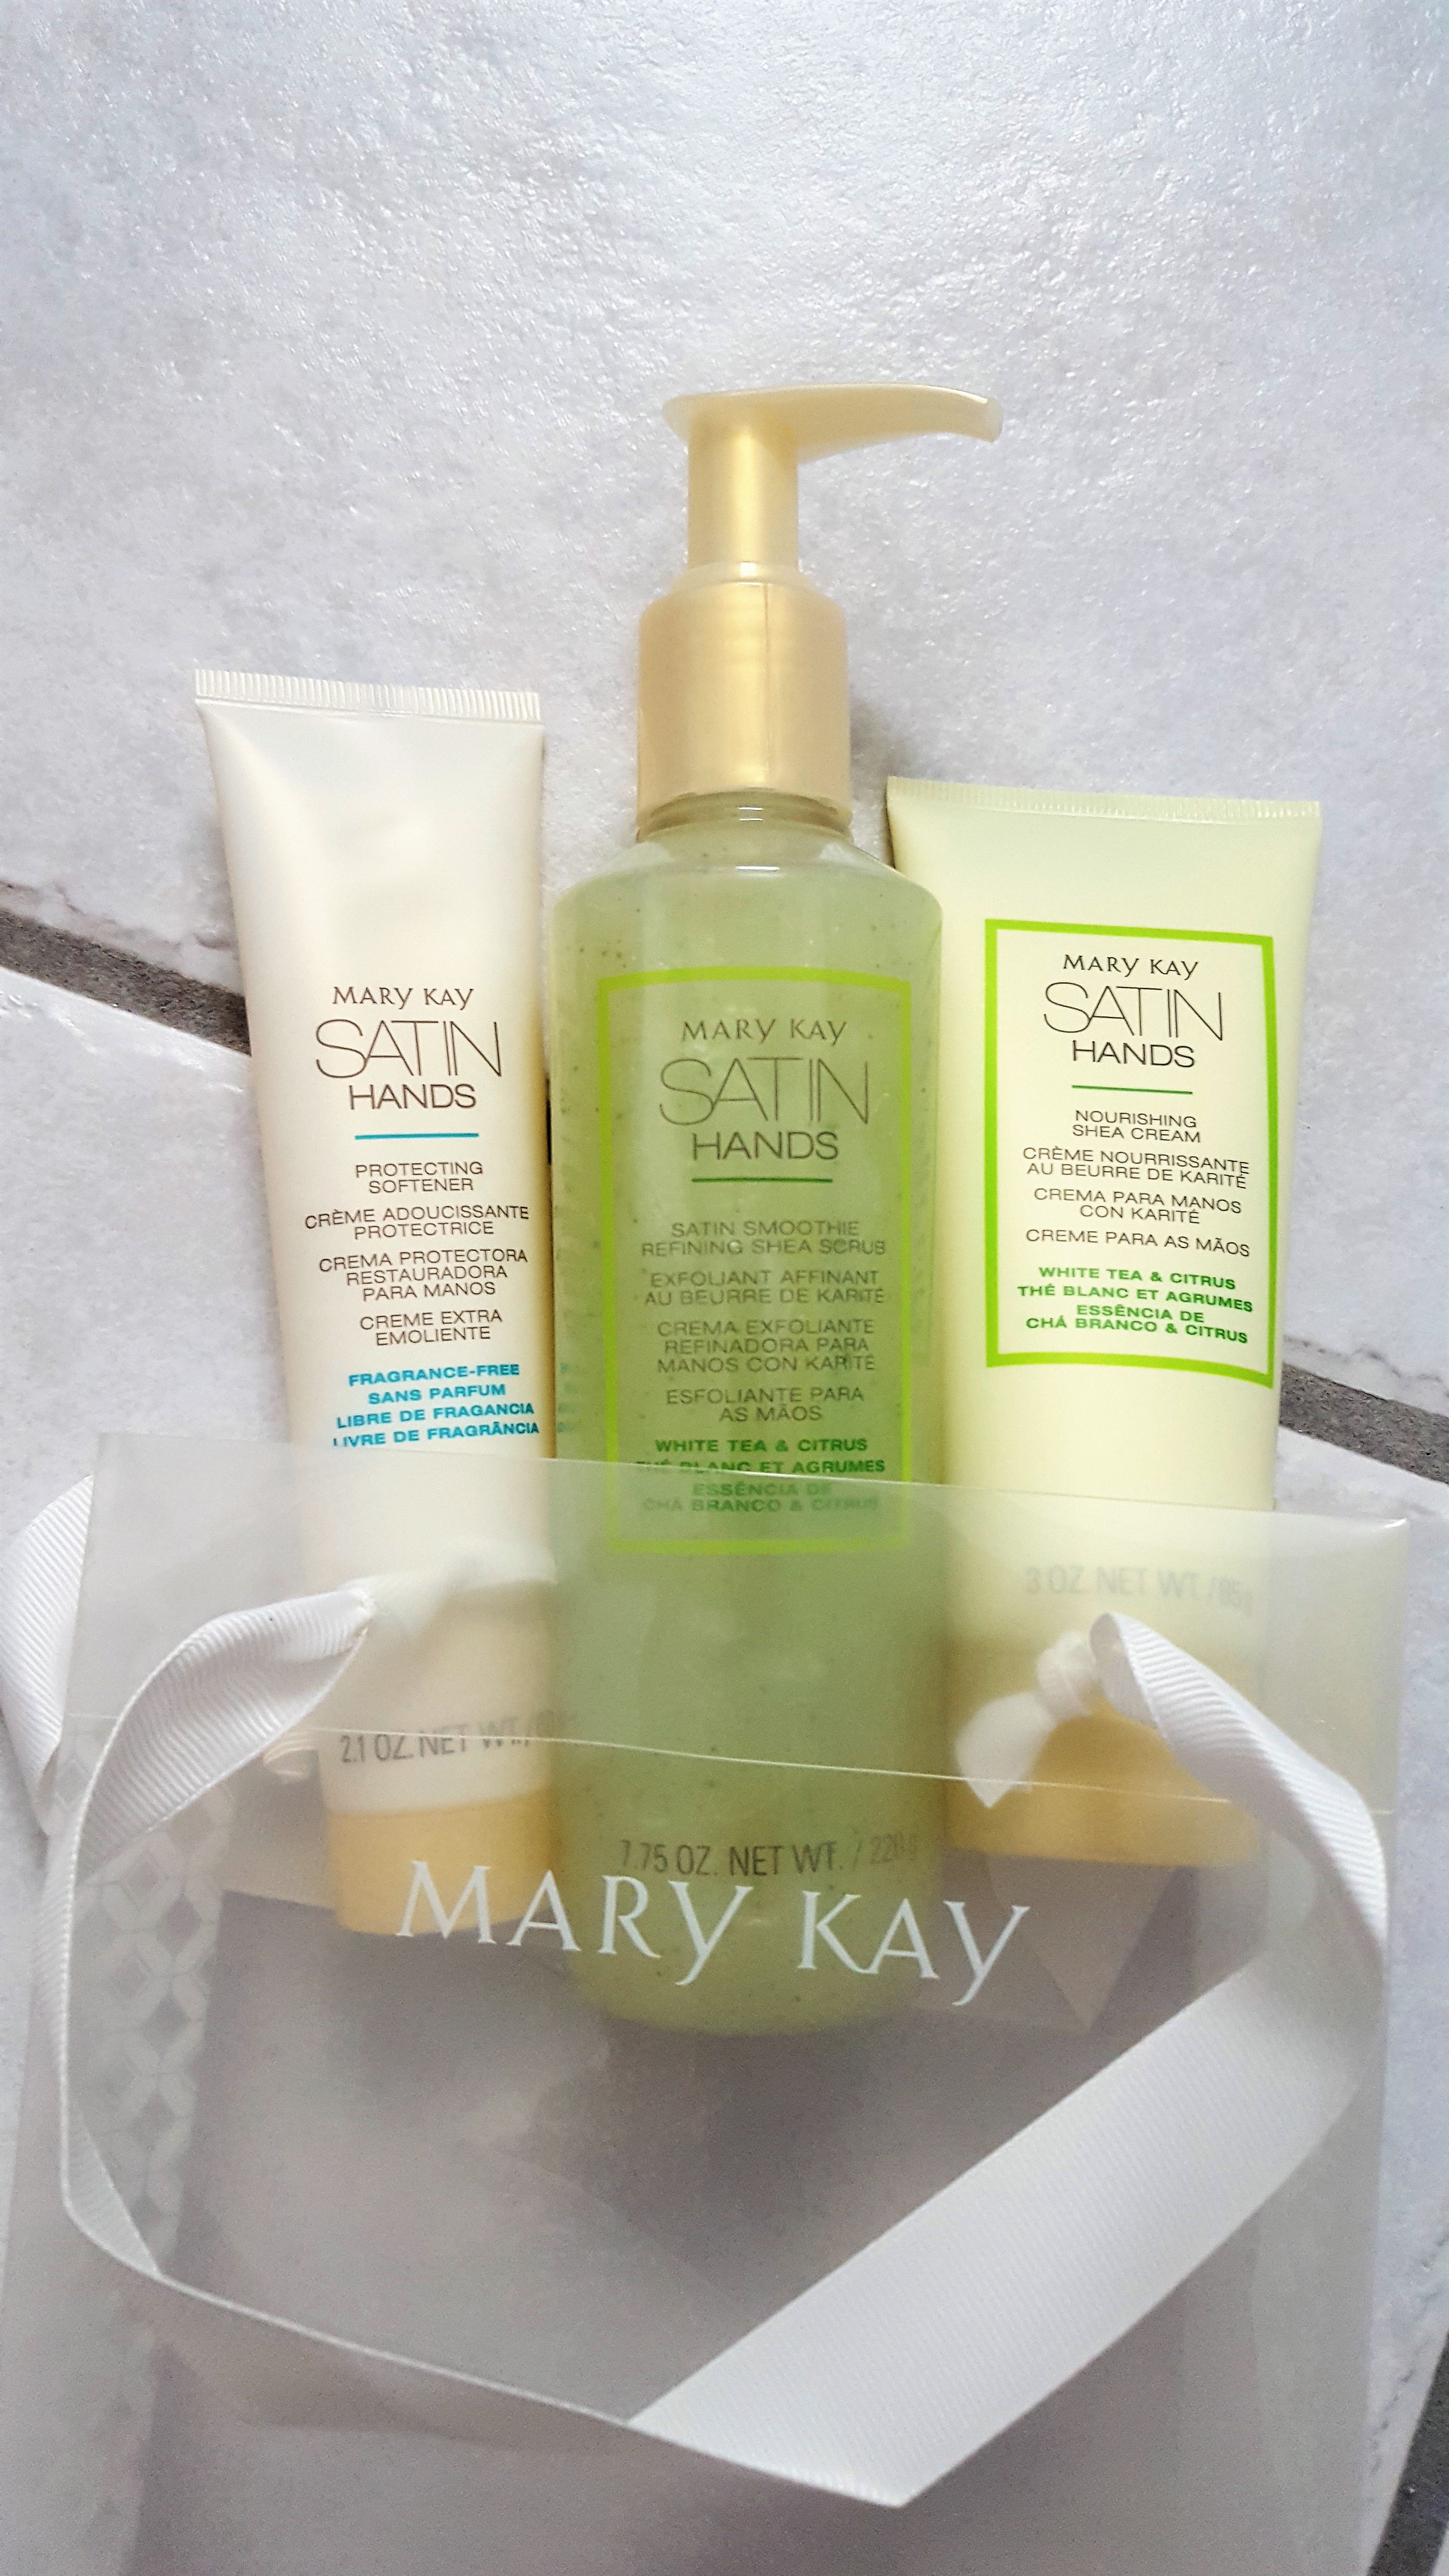 Mary Kay Satin Hands and Lip Sets - I'm Not a Beauty Guru